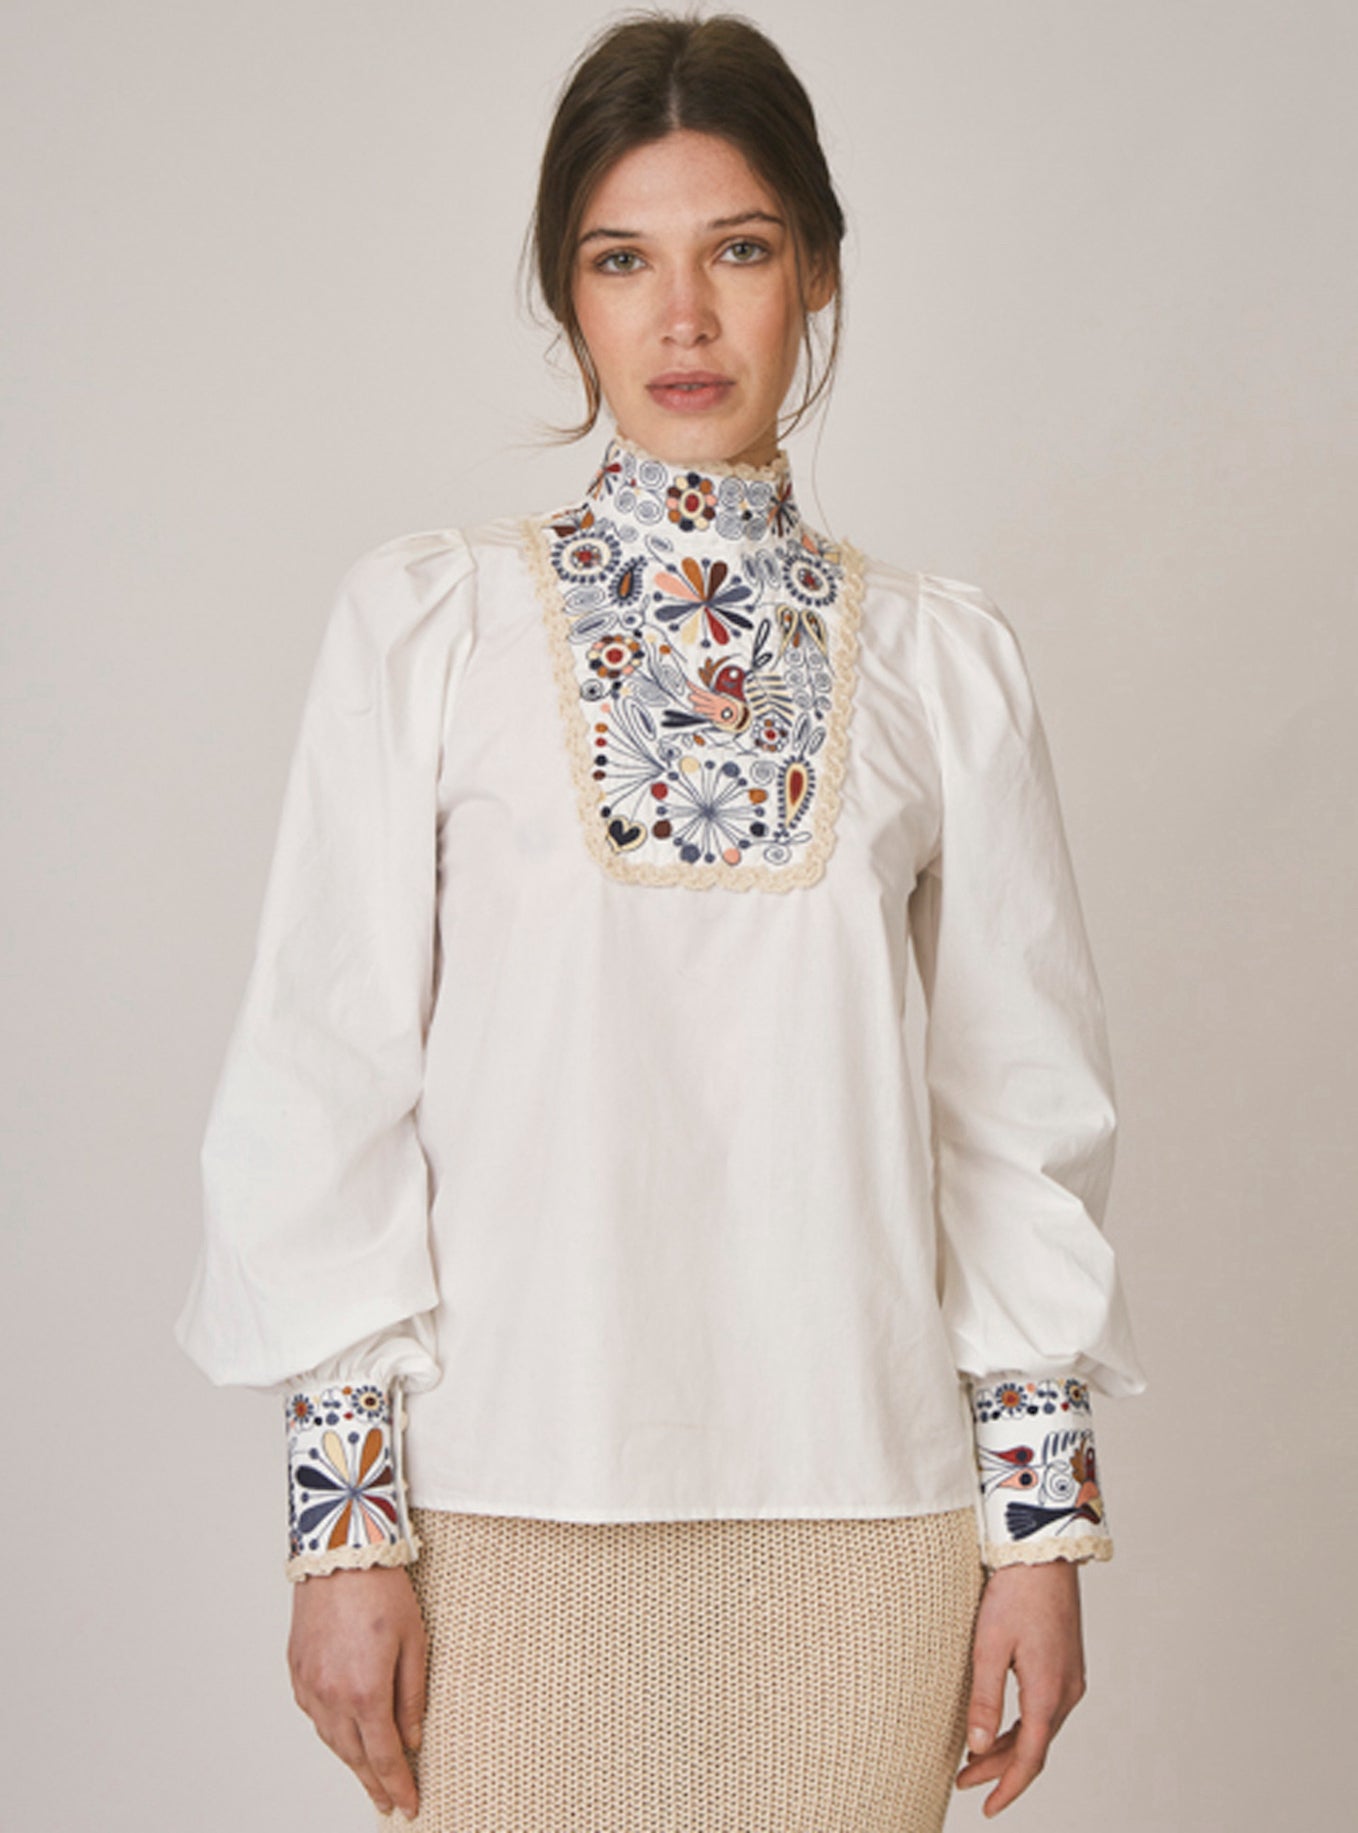 mock turtle neck floral shirt worn by model 